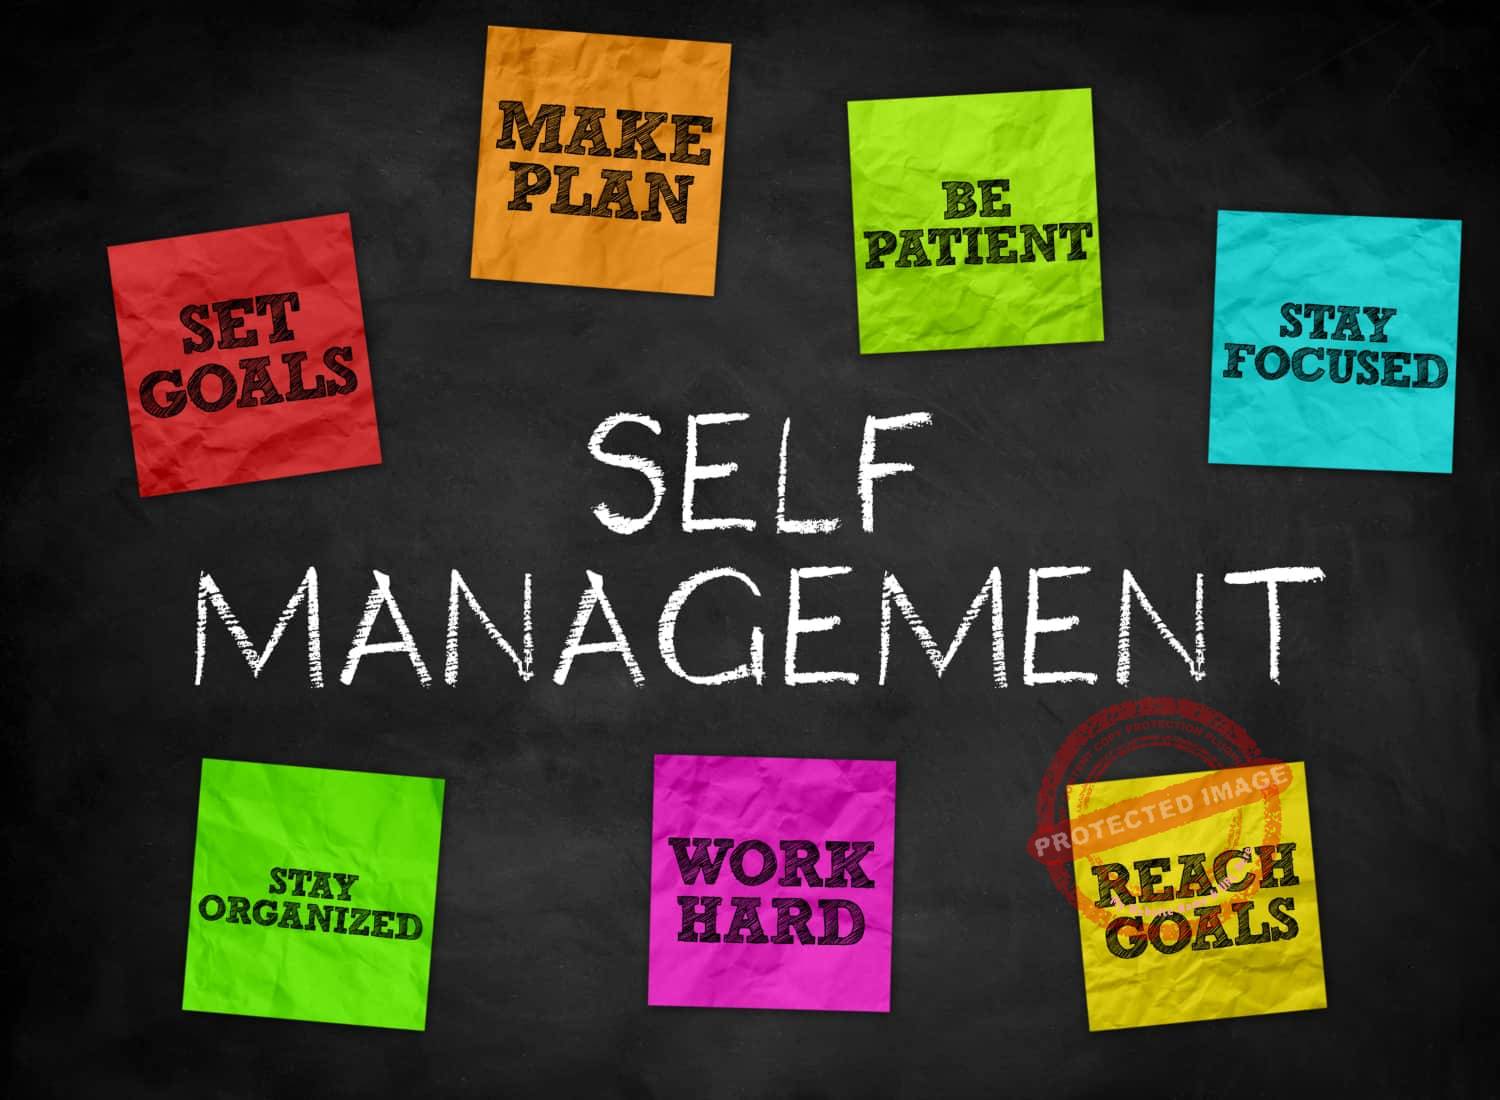 presentation on self management skills